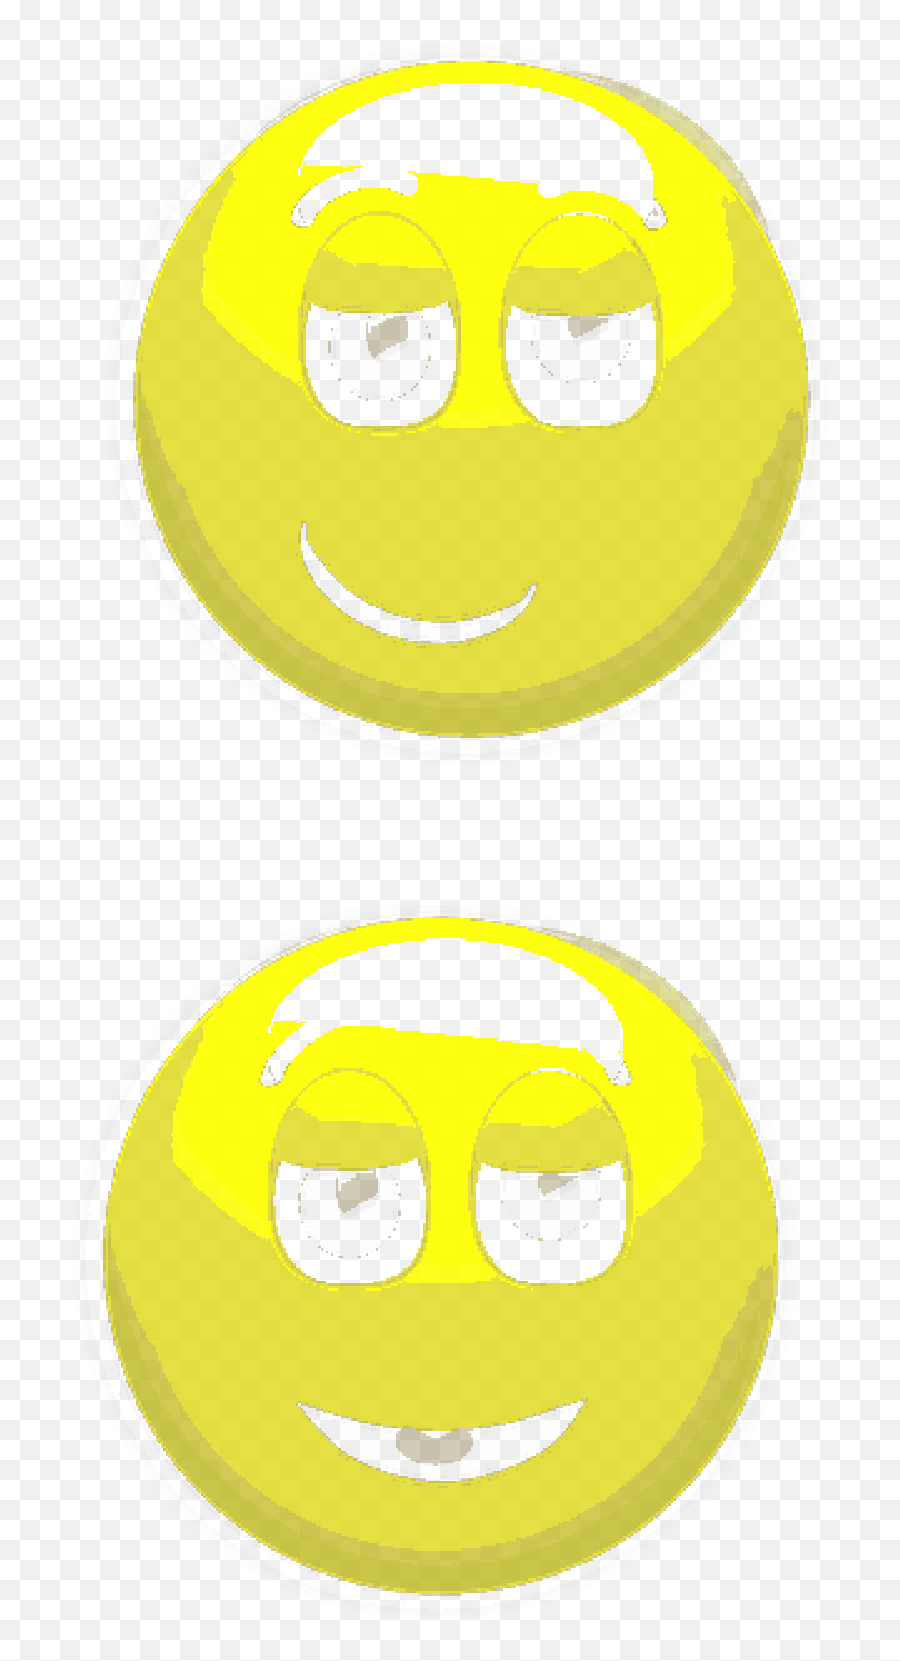 Smiley Smirk Relieved Happy Yellow Glossy Round - Smiley Emoji,Smirk Emoticon